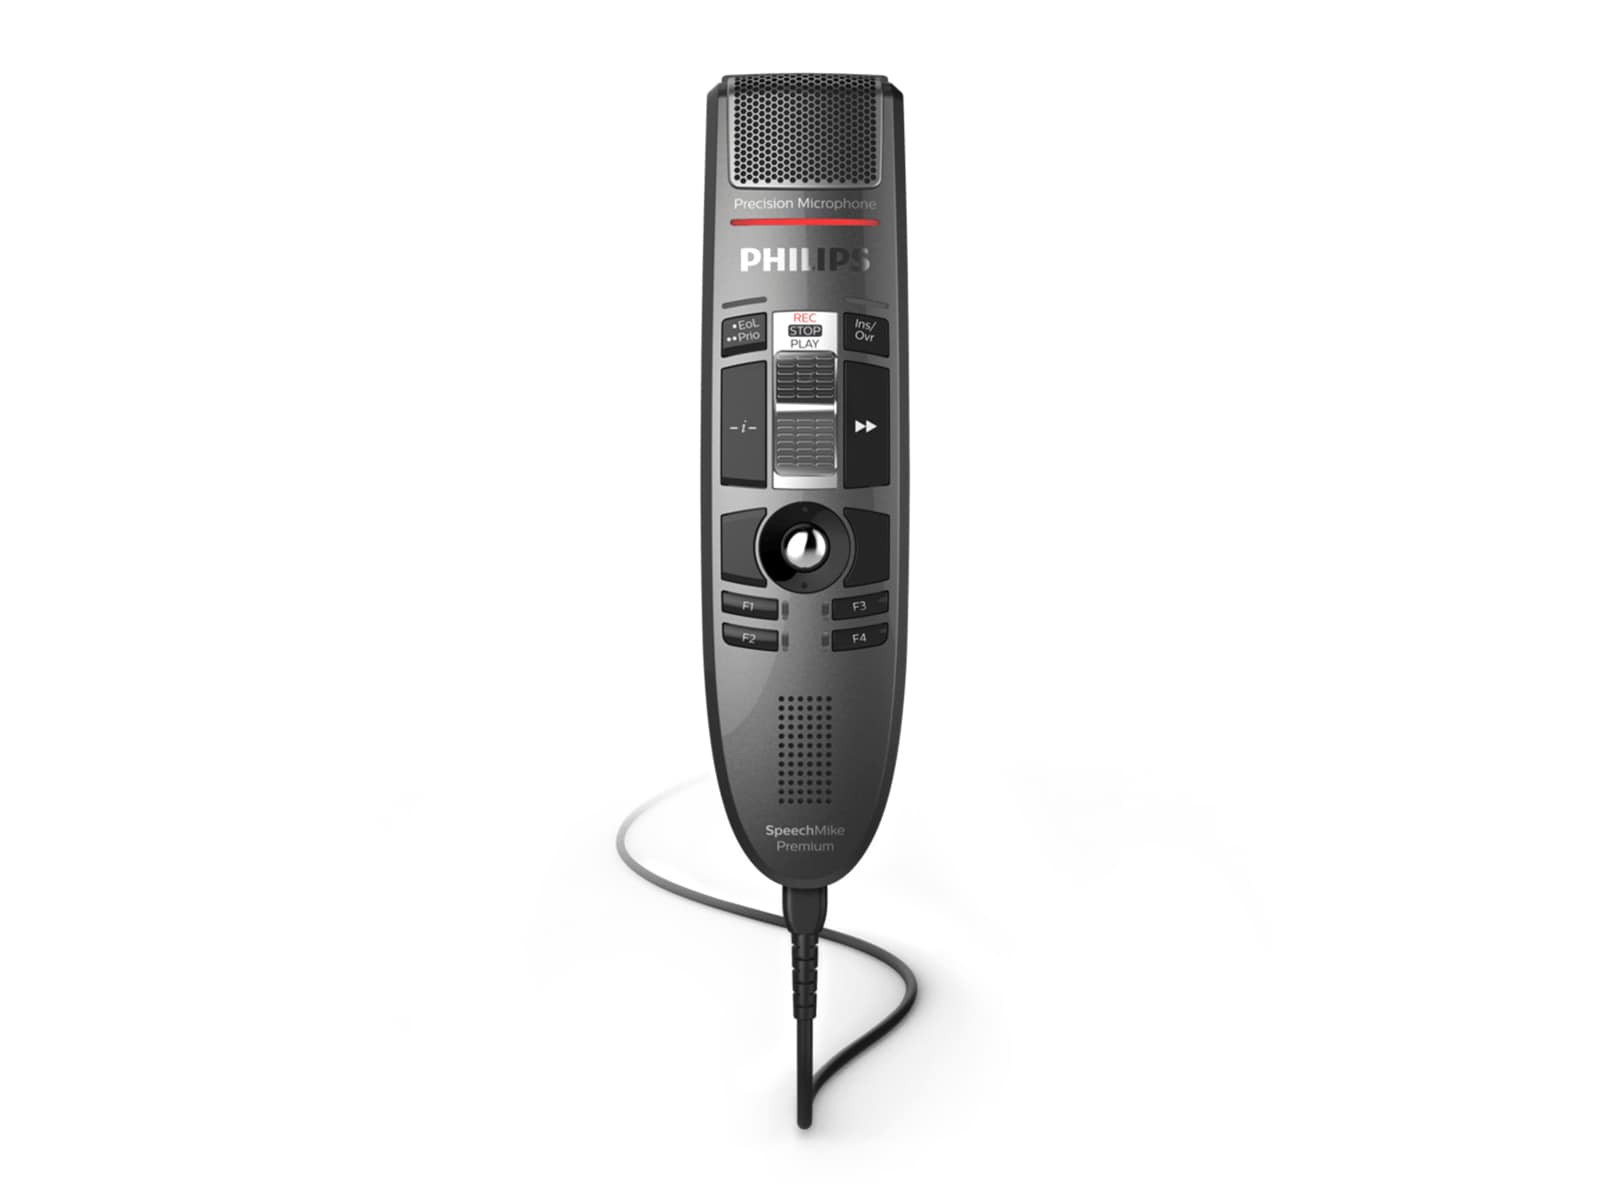 Philips SpeechMike Premium Slide Switch Dictation Microphone (LFH3510) Monitors.com 